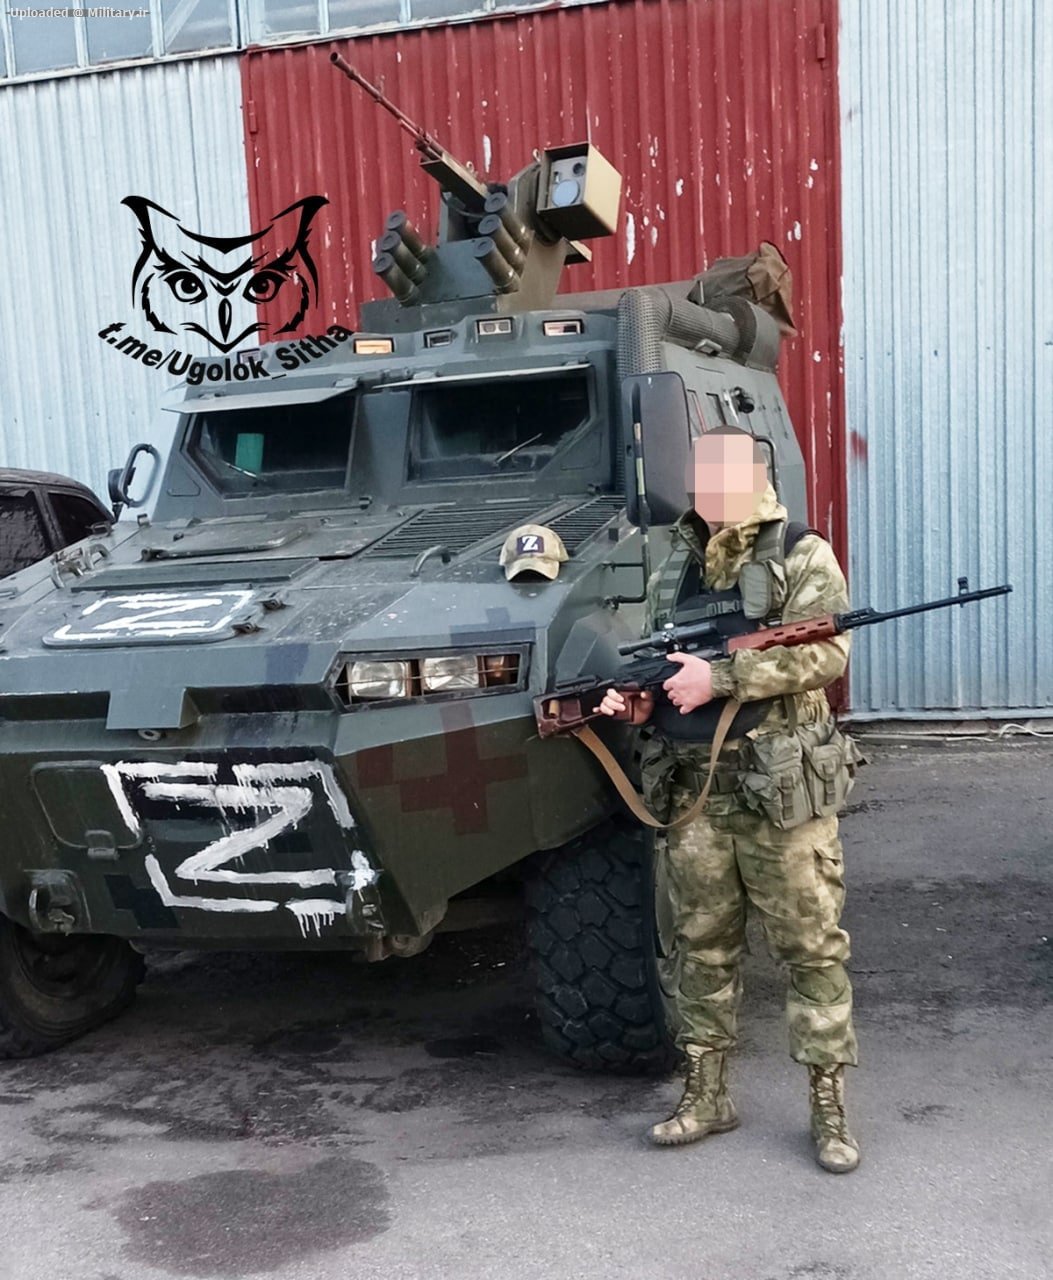 A_Ukrainian_Triton_armored_vehicle_with_